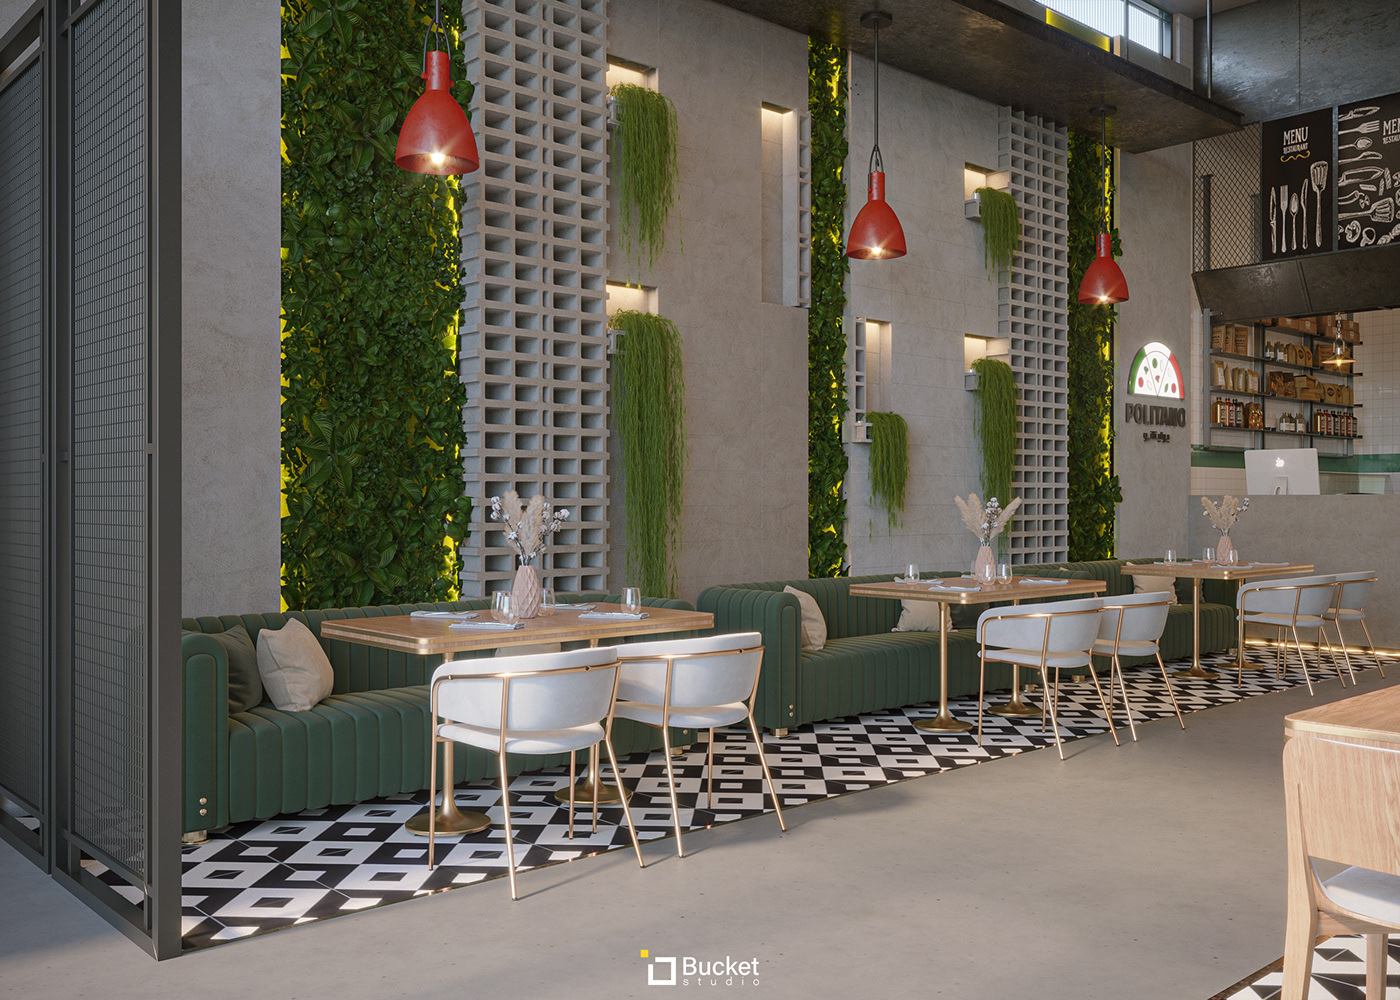 cafe interior design  Pizza Render restaurant visualization architecture graphic 3ds max CGI